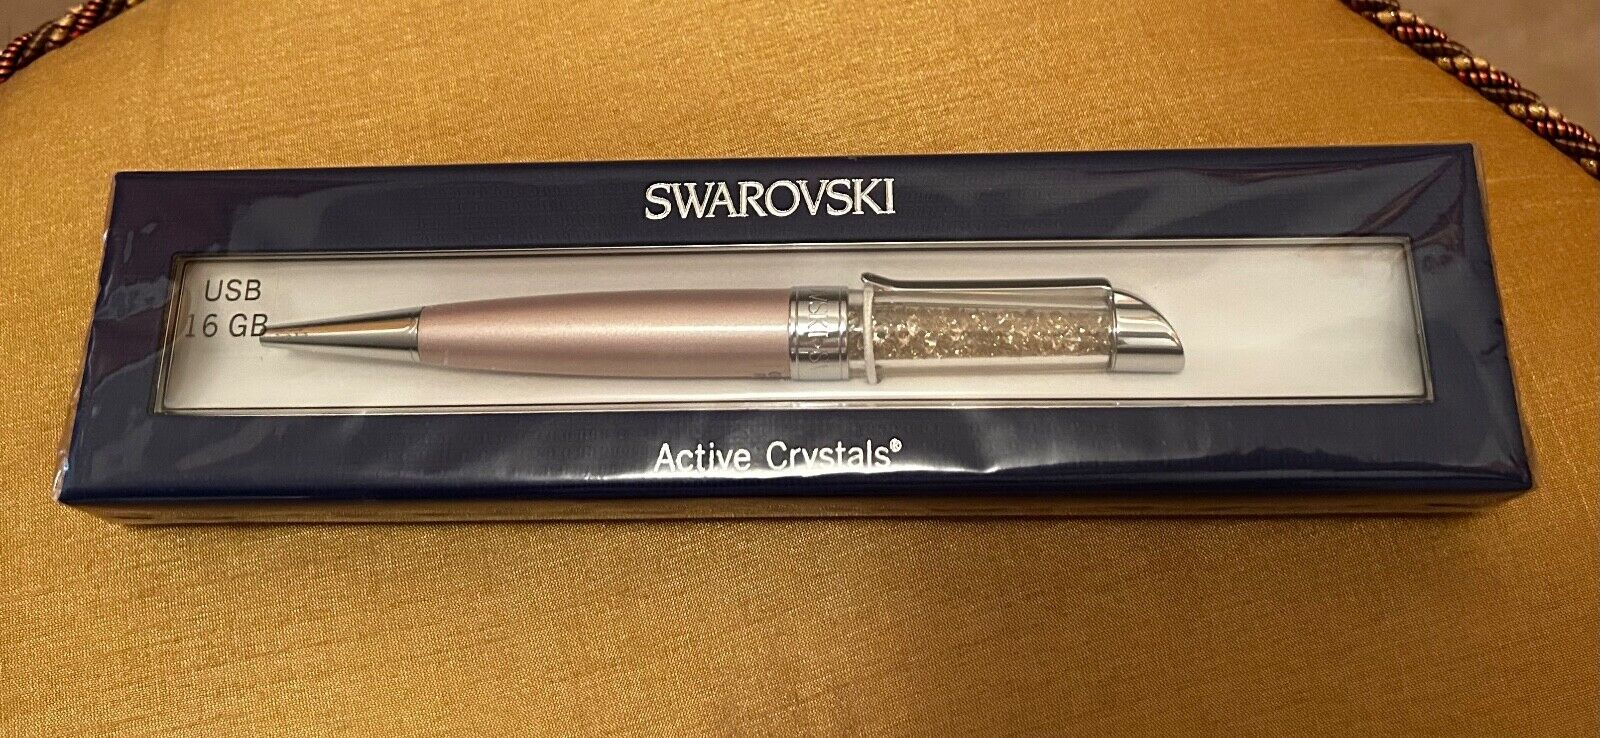 Swarovski Active Crystals Crystalline USB Pen Vintage Rose. New in Box